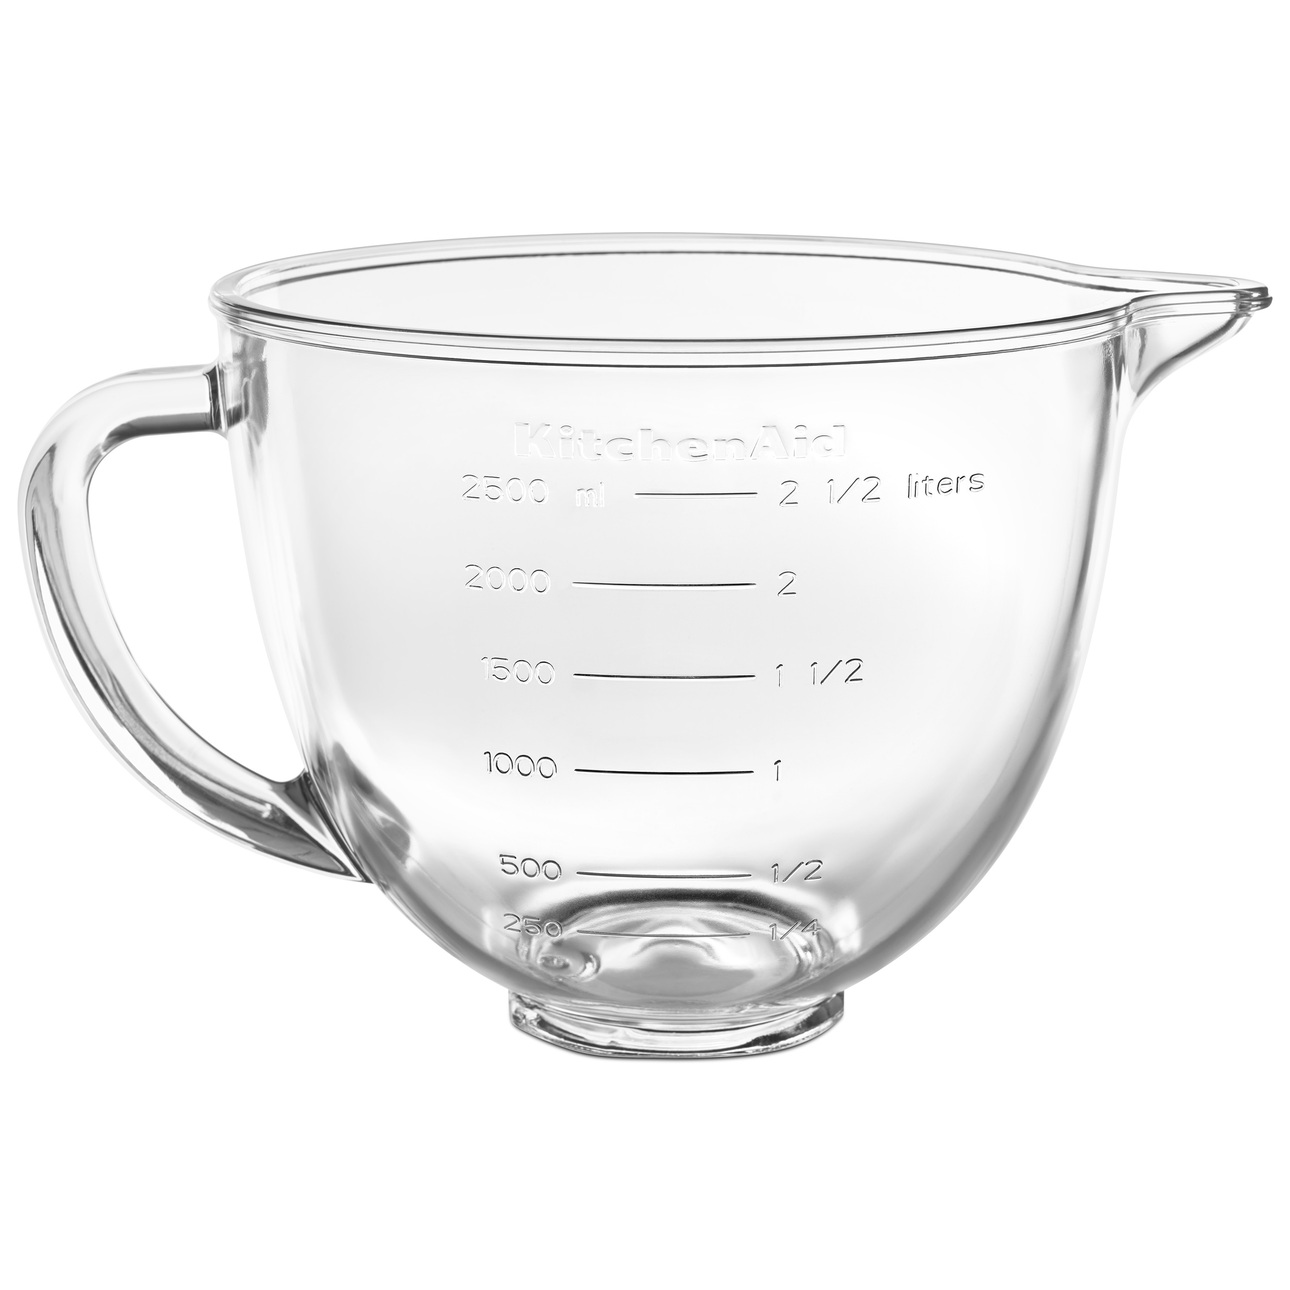 KitchenAid 3.5 Quart Tilt-Head Glass Bowl, Clear, KSM35GB - image 1 of 4